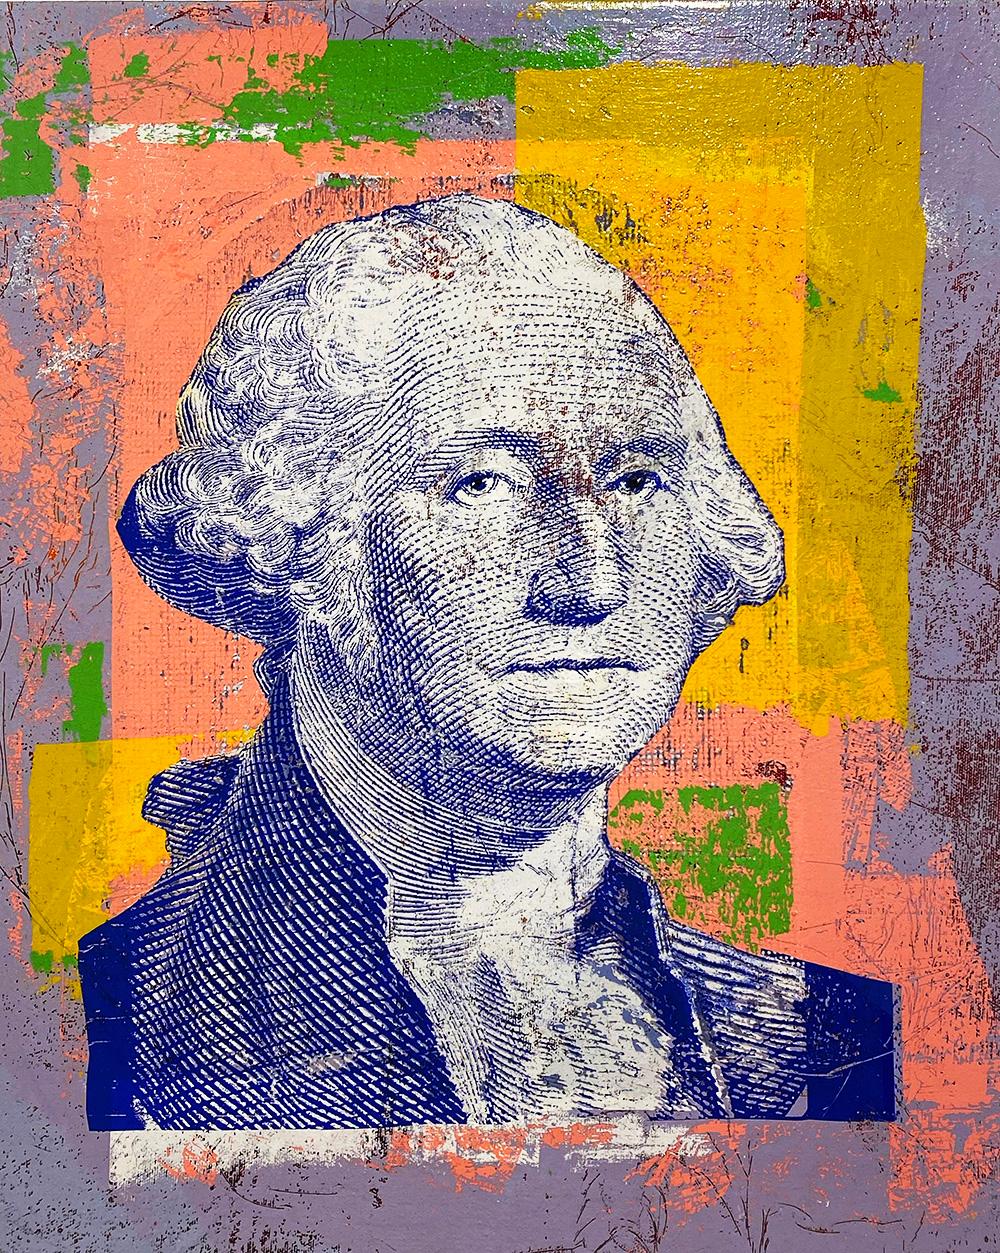 Houben R.T. Figurative Painting - George Washington $1